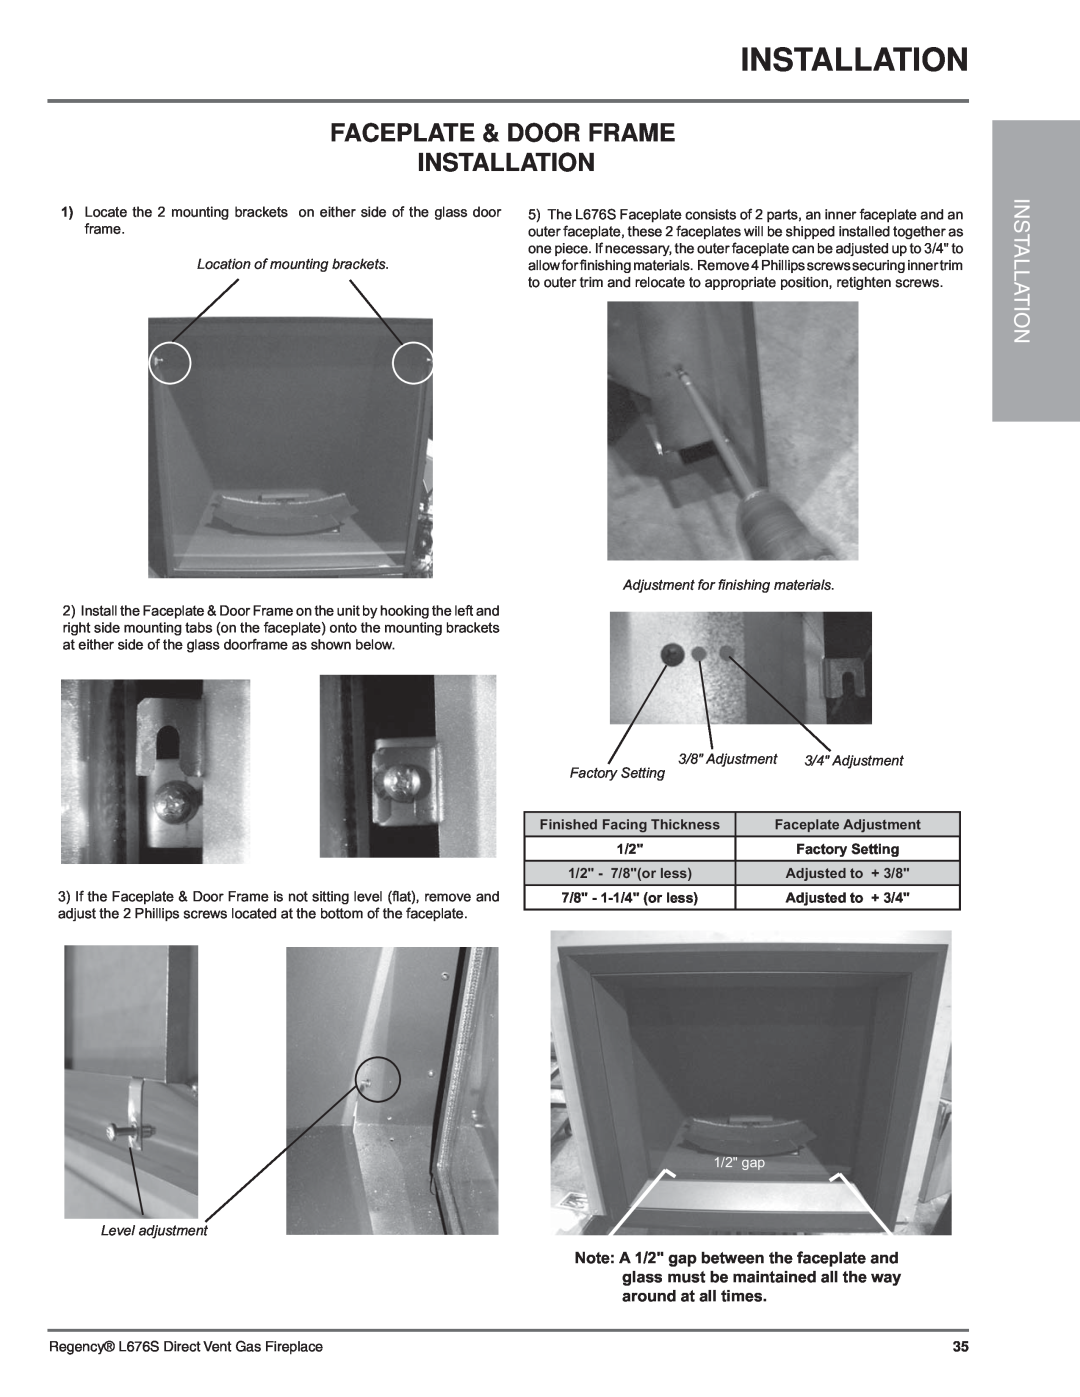 Regency L676S-NG1 Faceplate & Door Frame Installation, Location of mounting brackets, Level adjustment, 3/8 Adjustment 